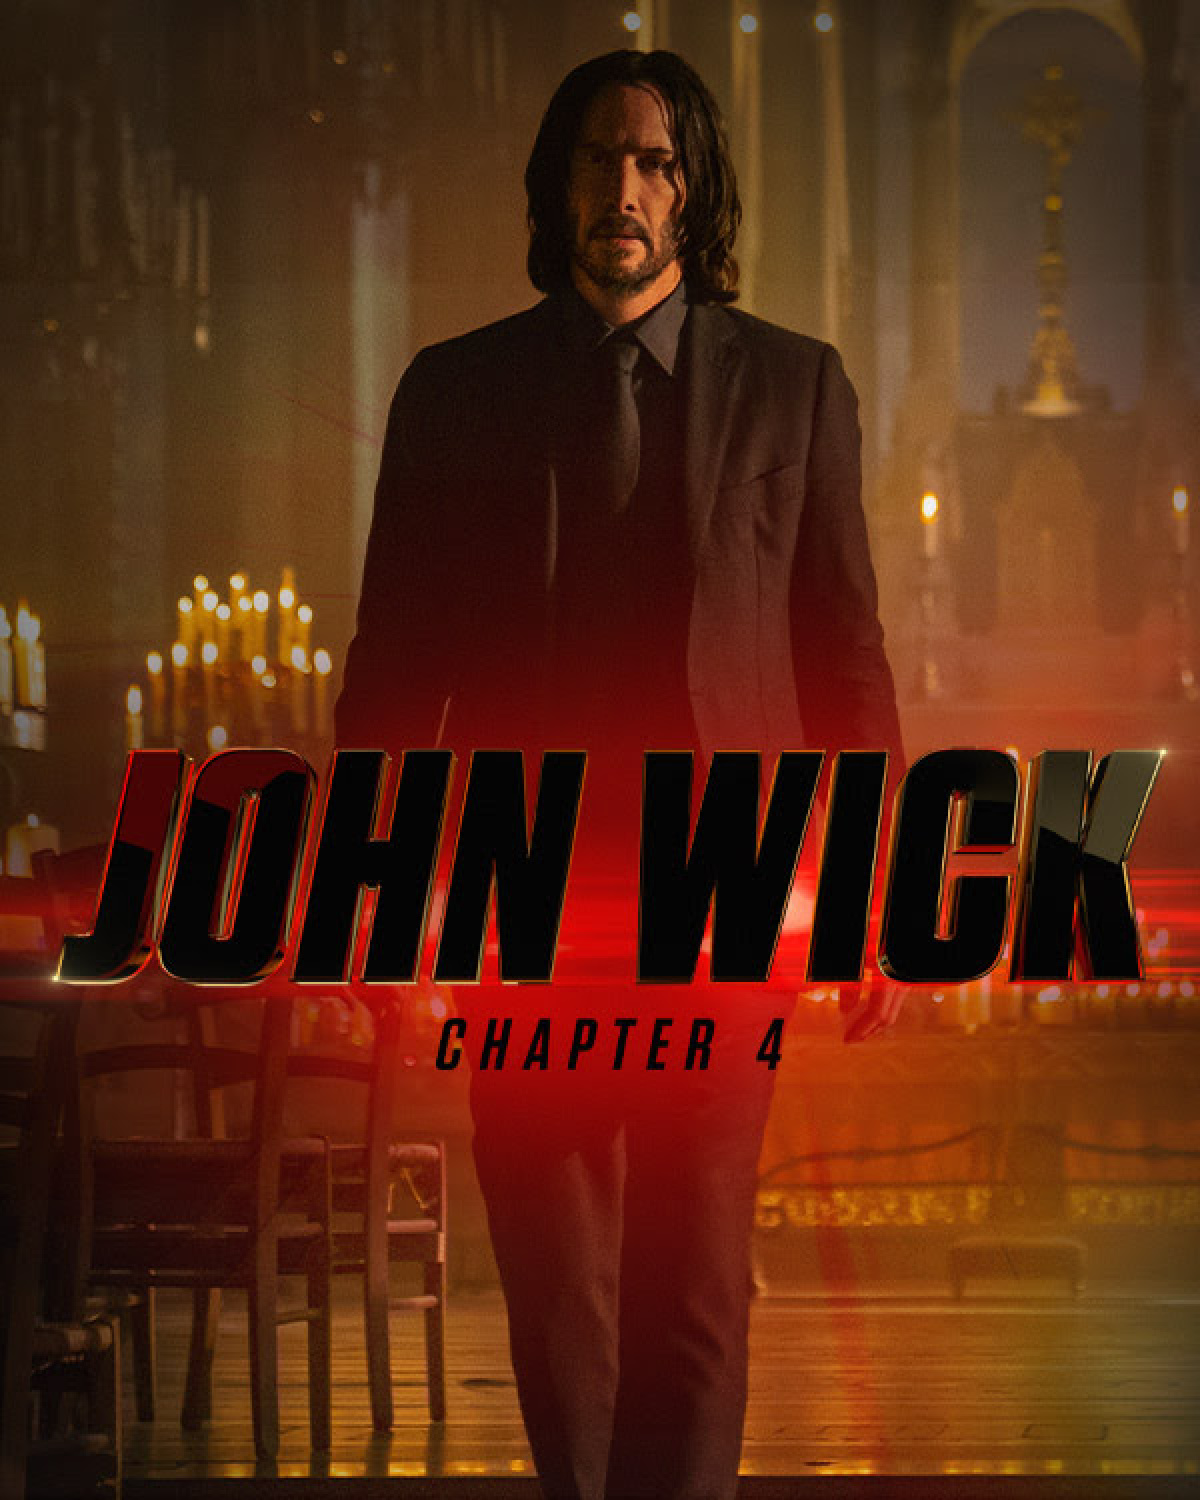 John Wick: Chapter 4 trailer sees Keanu Reeves taking revenge global